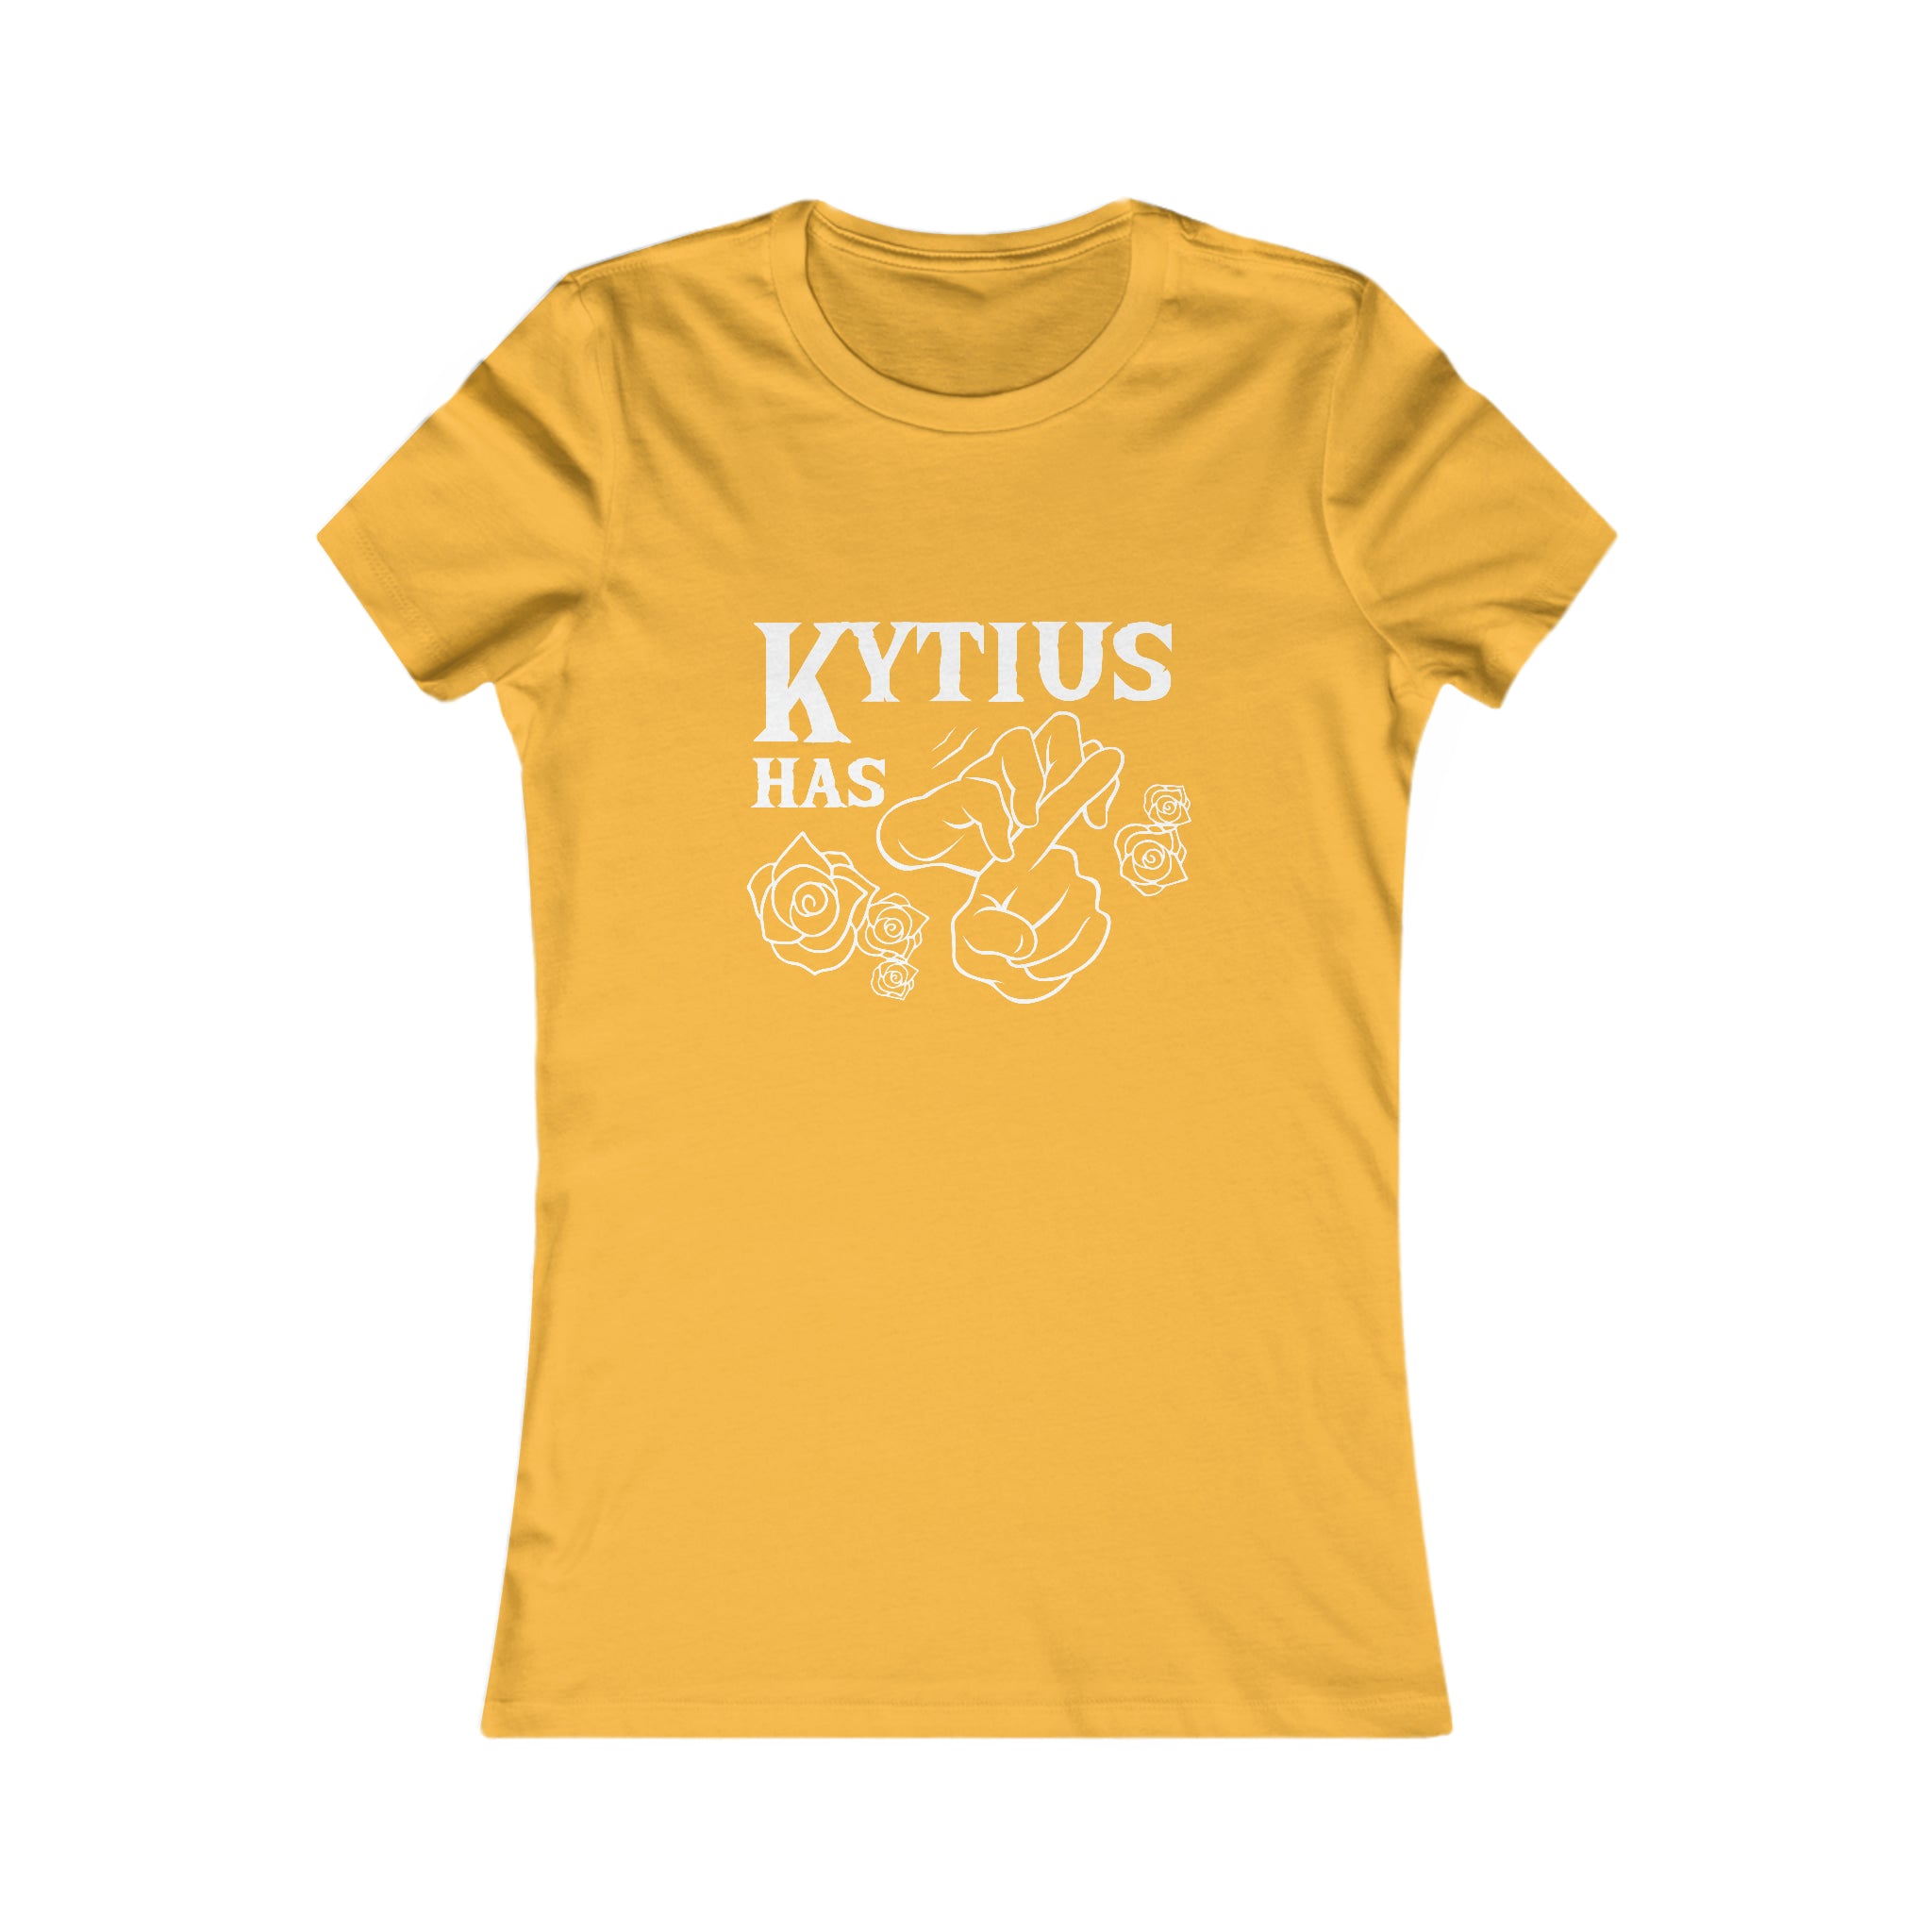 'Kytius has Herpes' Women's Crewneck T-shirt